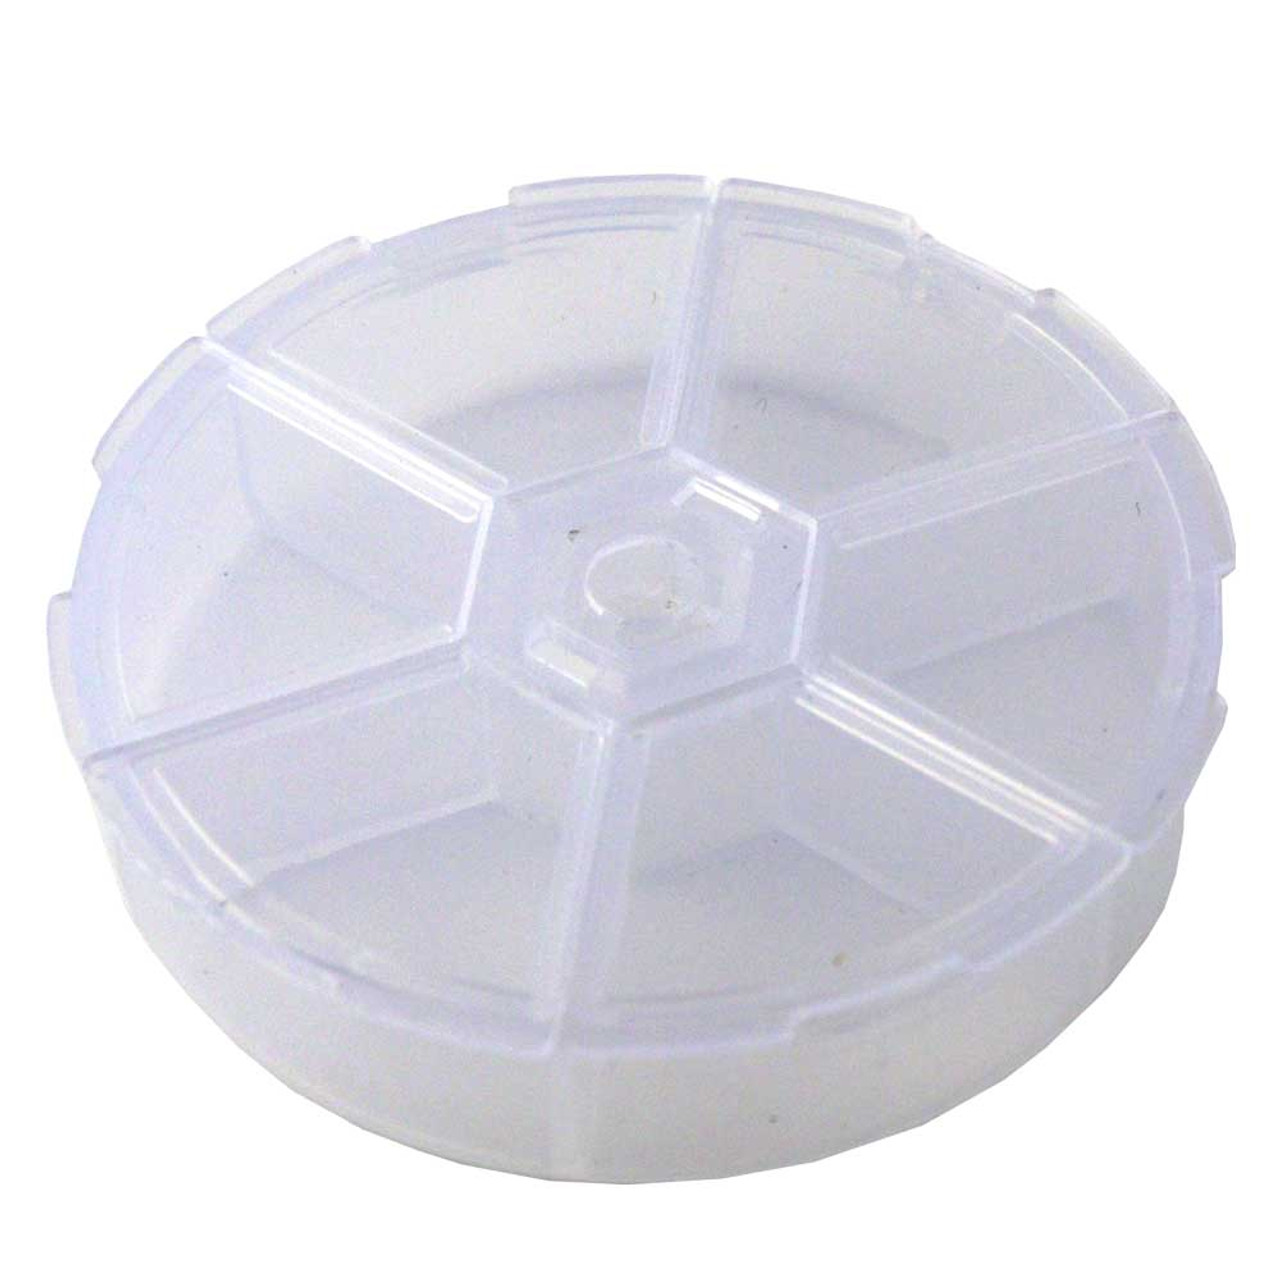 6 Compartment Round Plastic Storage Box with Snap Closure